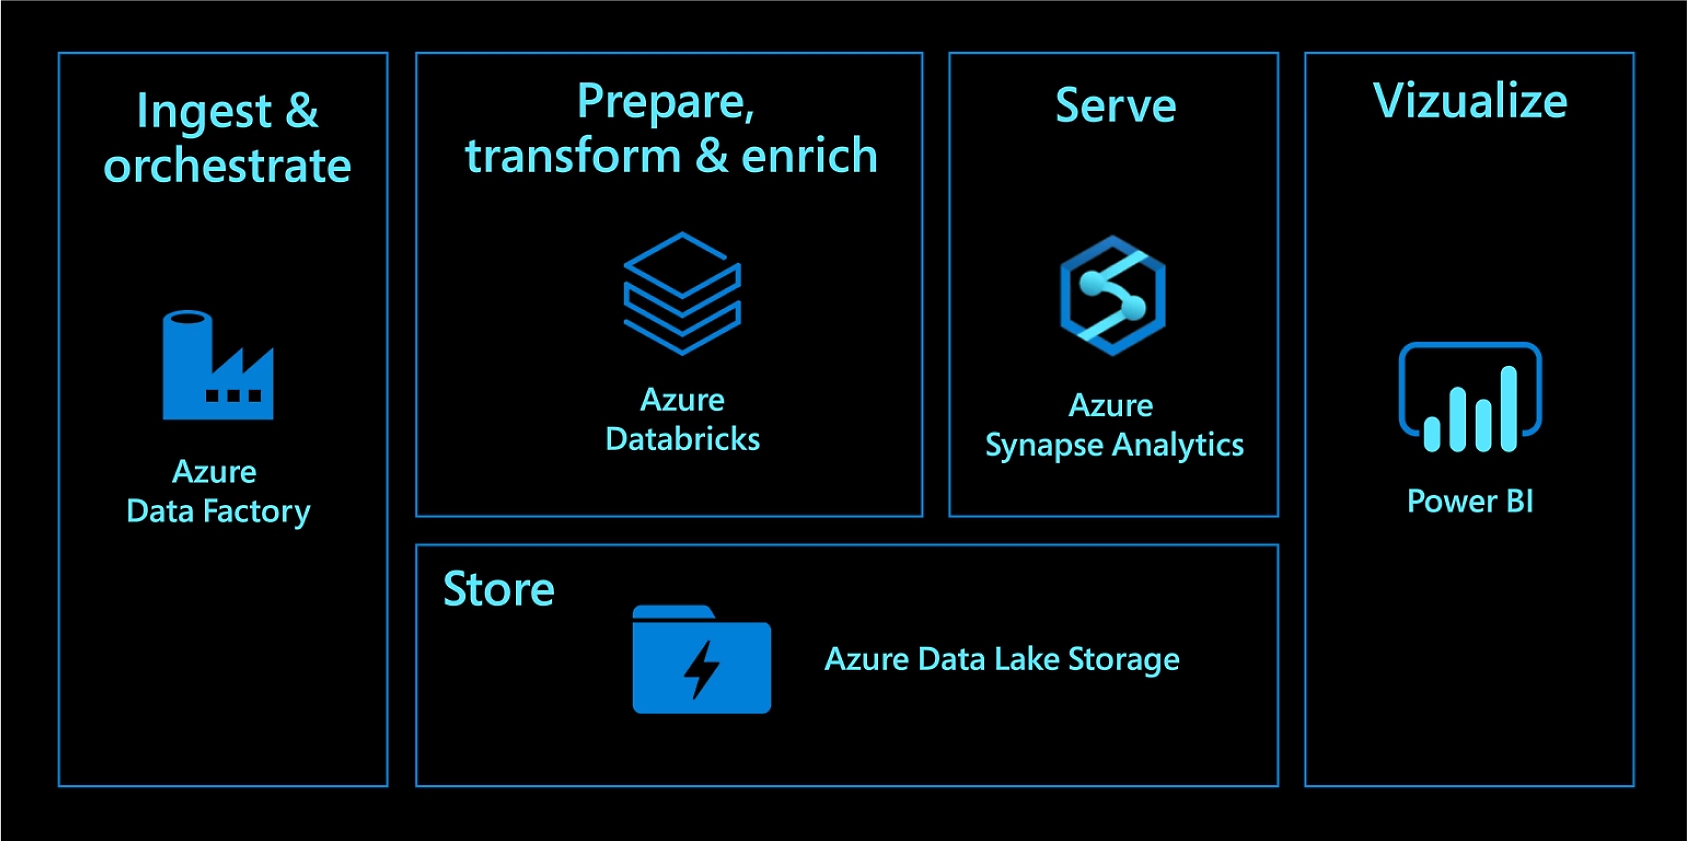 Overfør og orkestrer med Azure Data Factory. Forberedelse, transformation og forbedring med Azure Databricks. Behandling med Azure Synapse Analytics. Gem med Azure Data Lake Storage. Visualiser med Power BI.